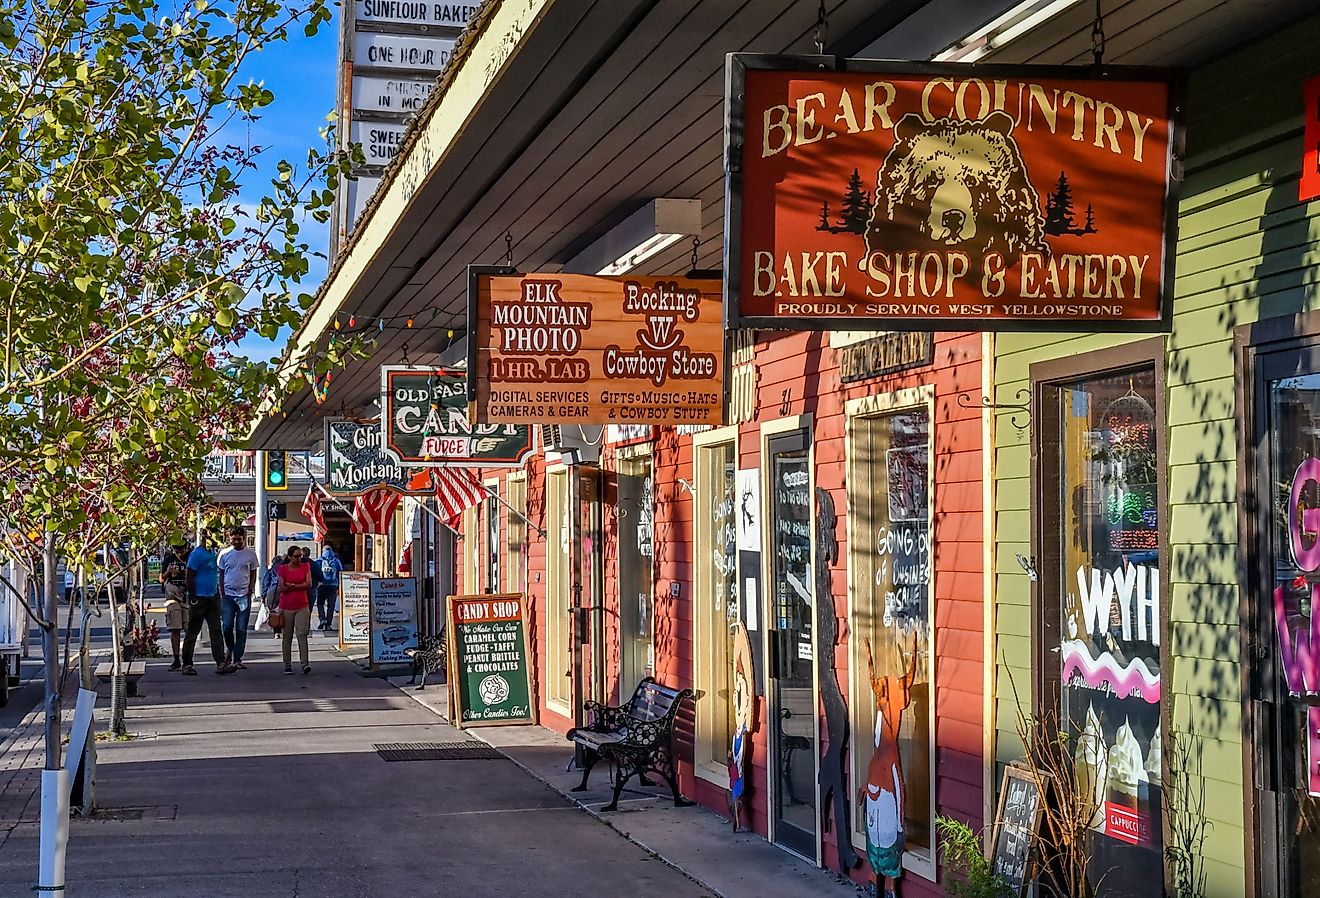 Shops along Canyon Street in West Yellowstone, Montana. Image credit Matthew Thomas Allen via Shutterstock.